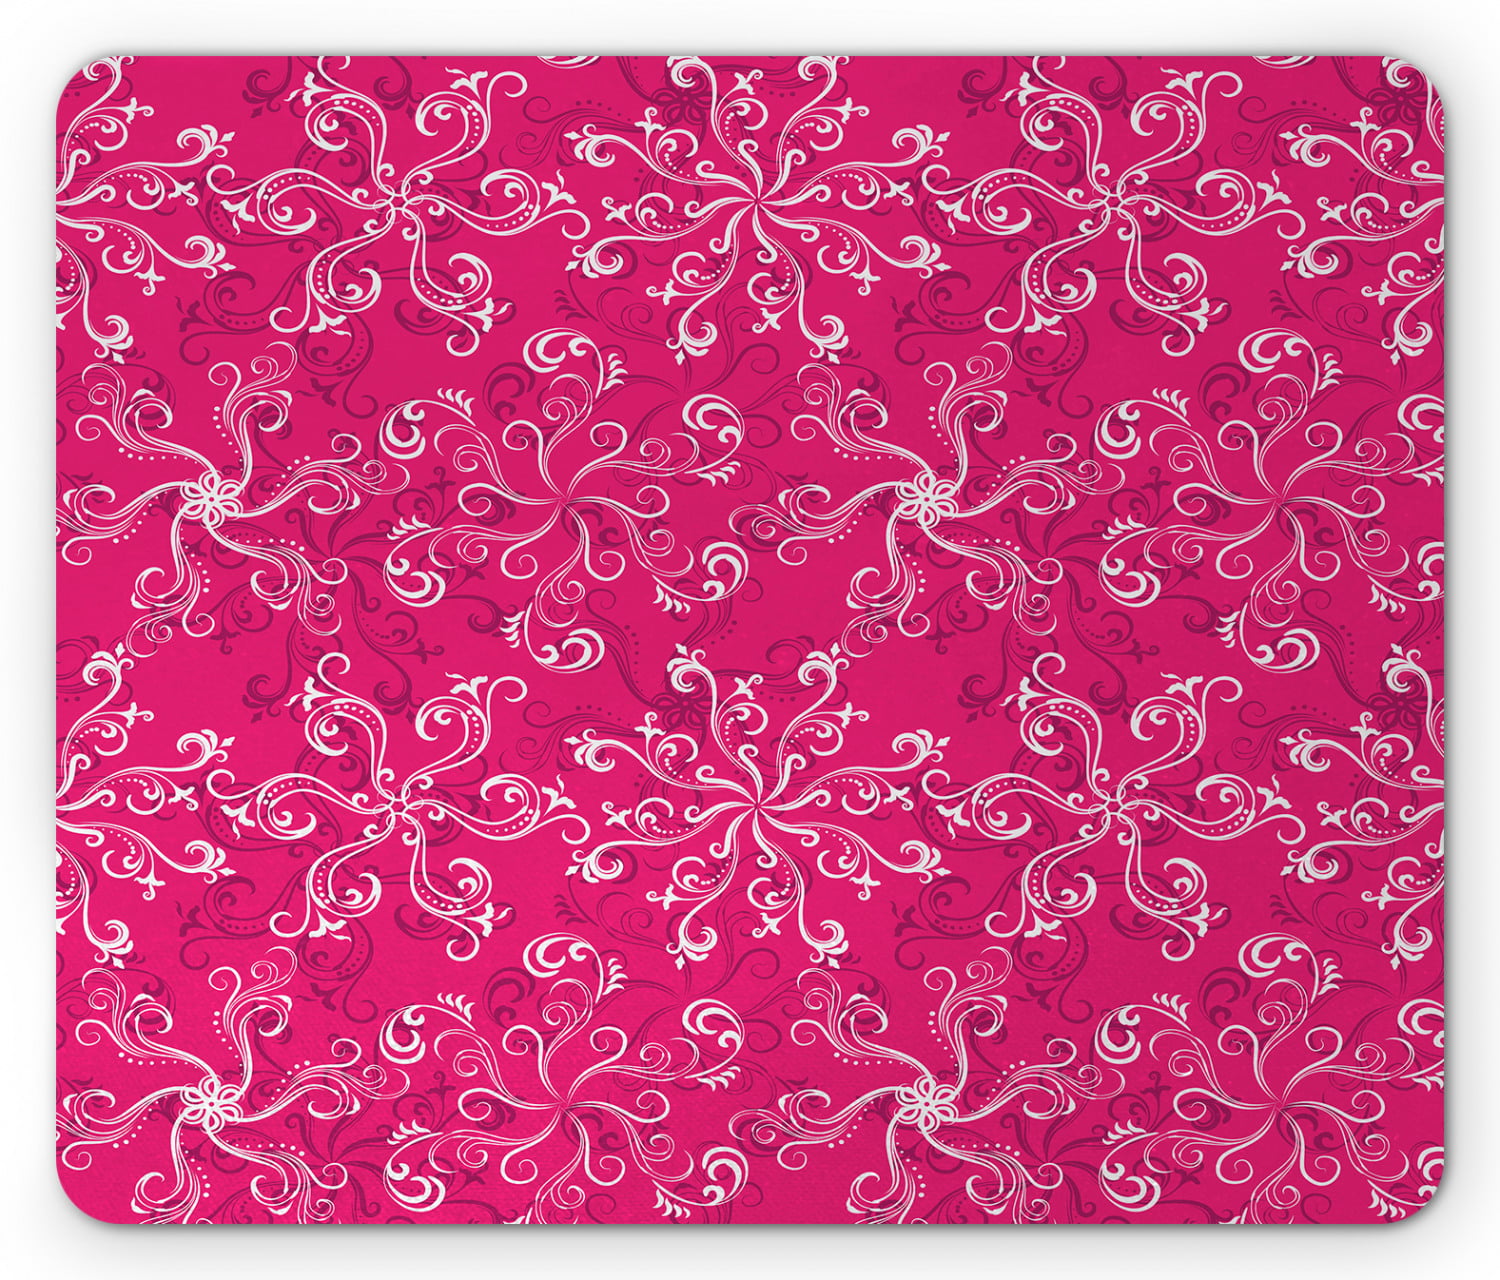 Hot Pink Mouse Pad, Floral Arrangement Pattern on Hot Pink Background ...